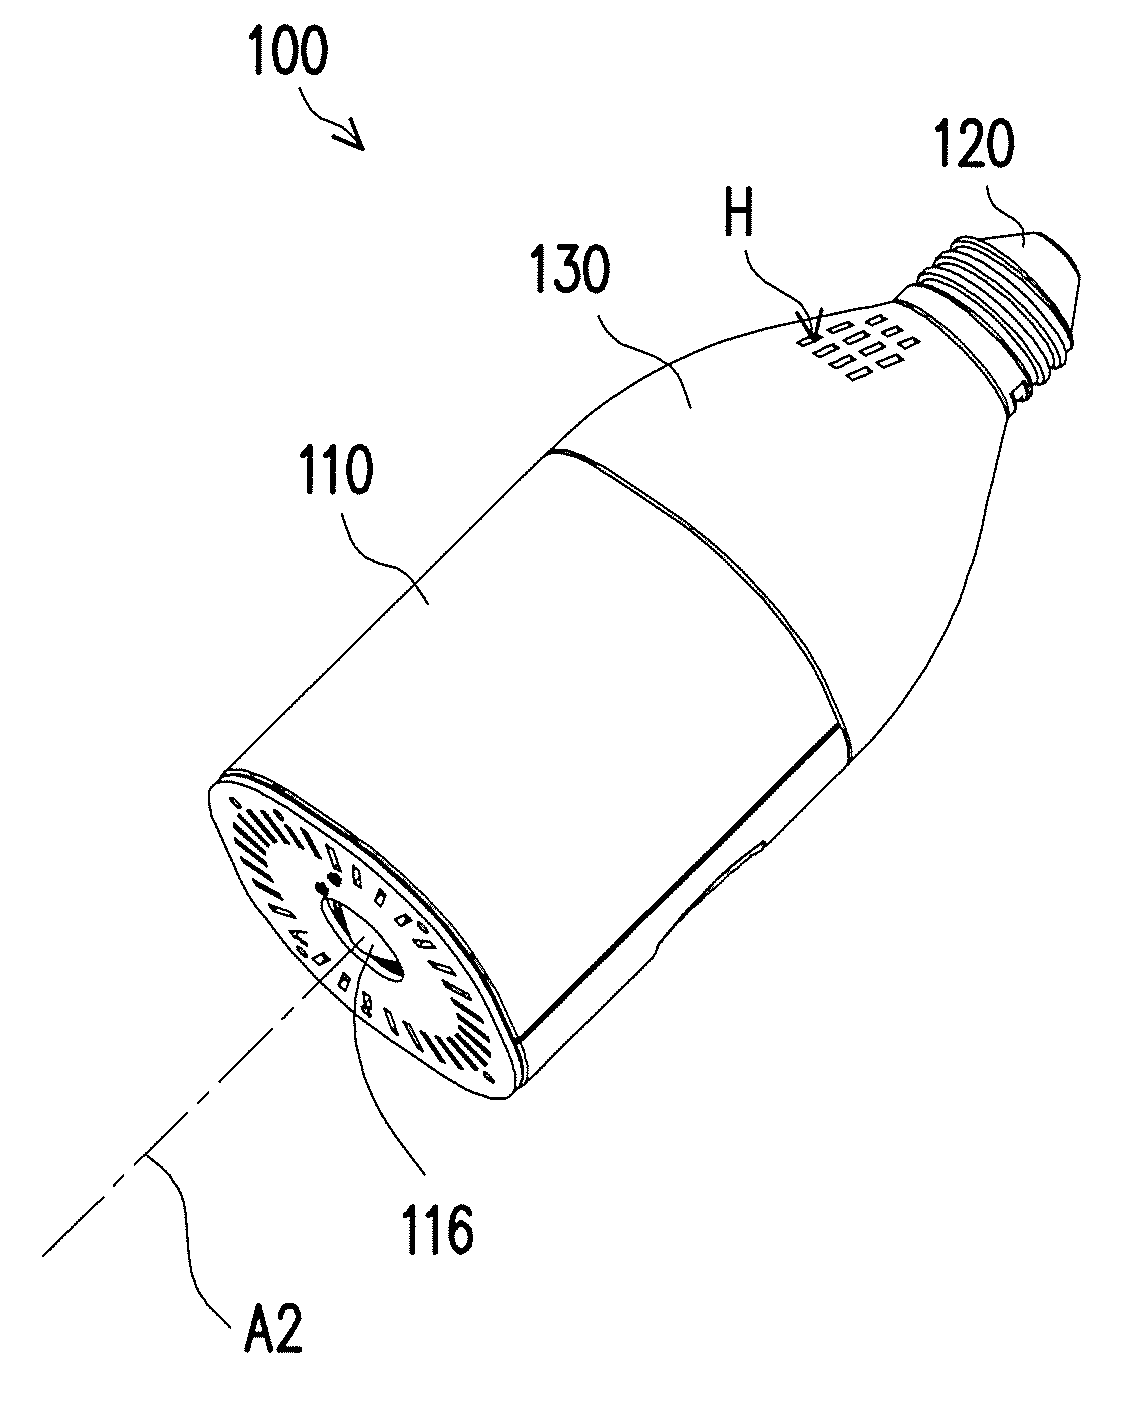 Projection apparatus